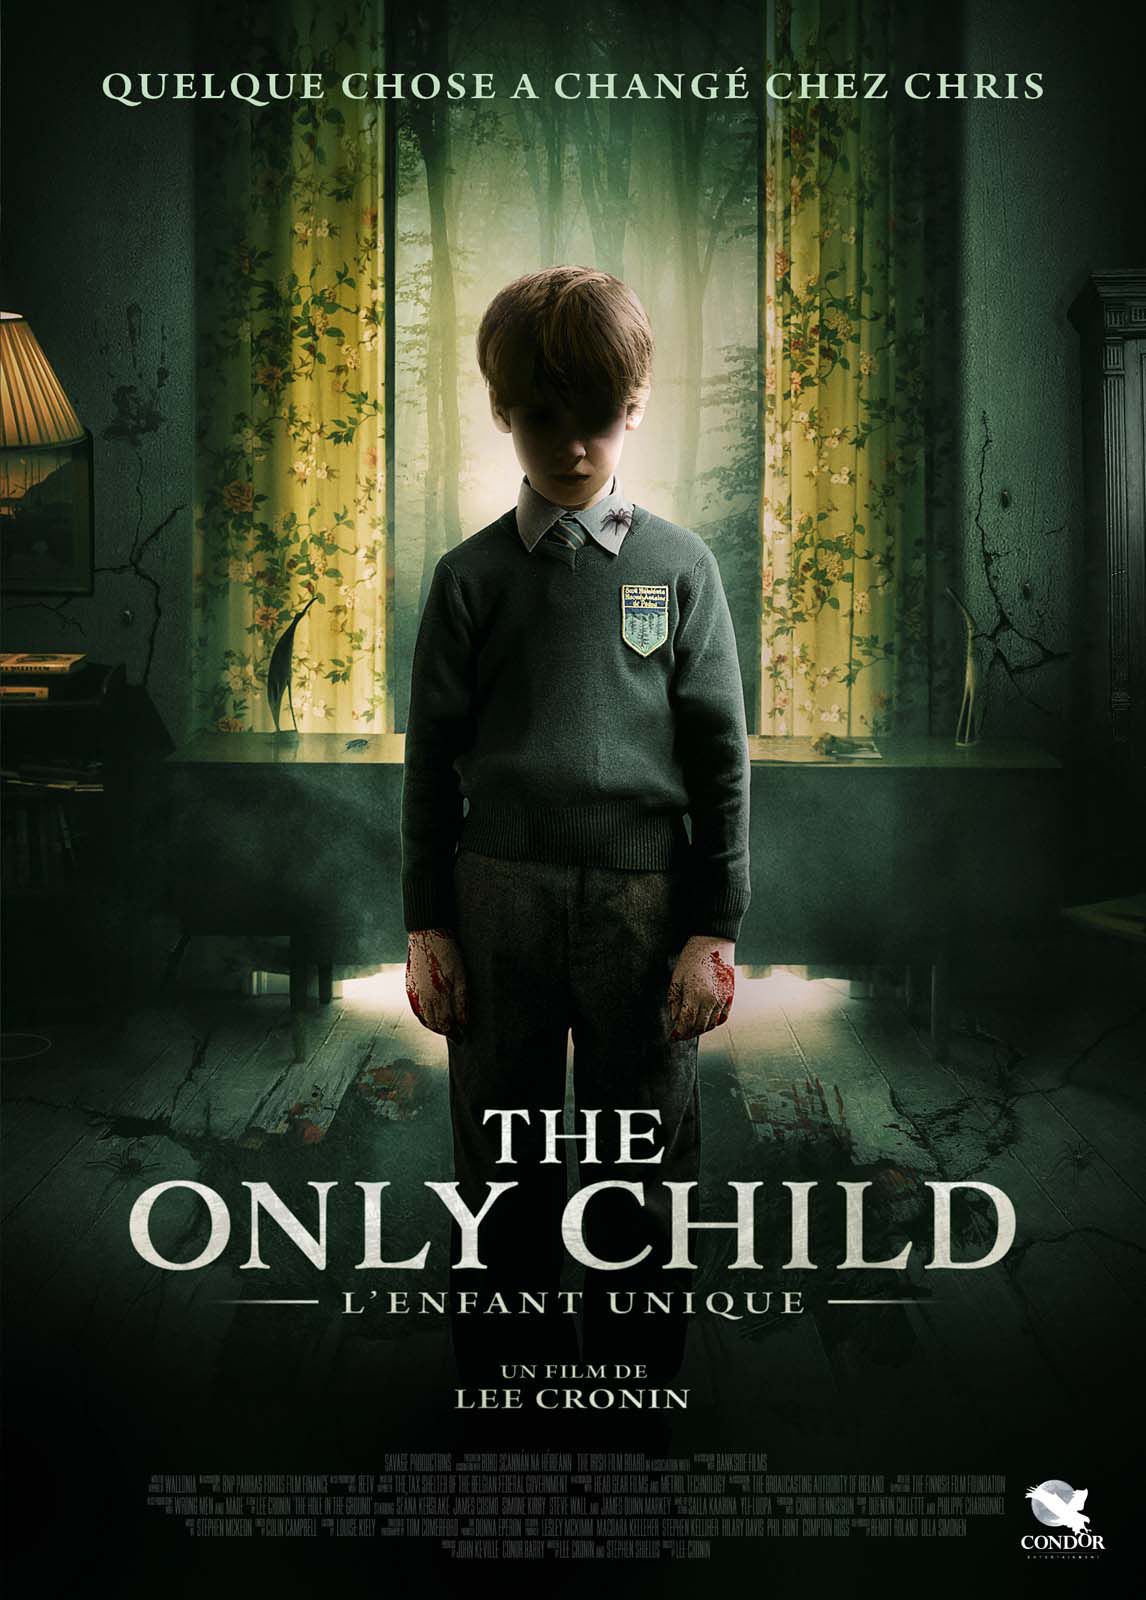 The Only Child - L'Enfant unique - Film (2019) streaming VF gratuit complet